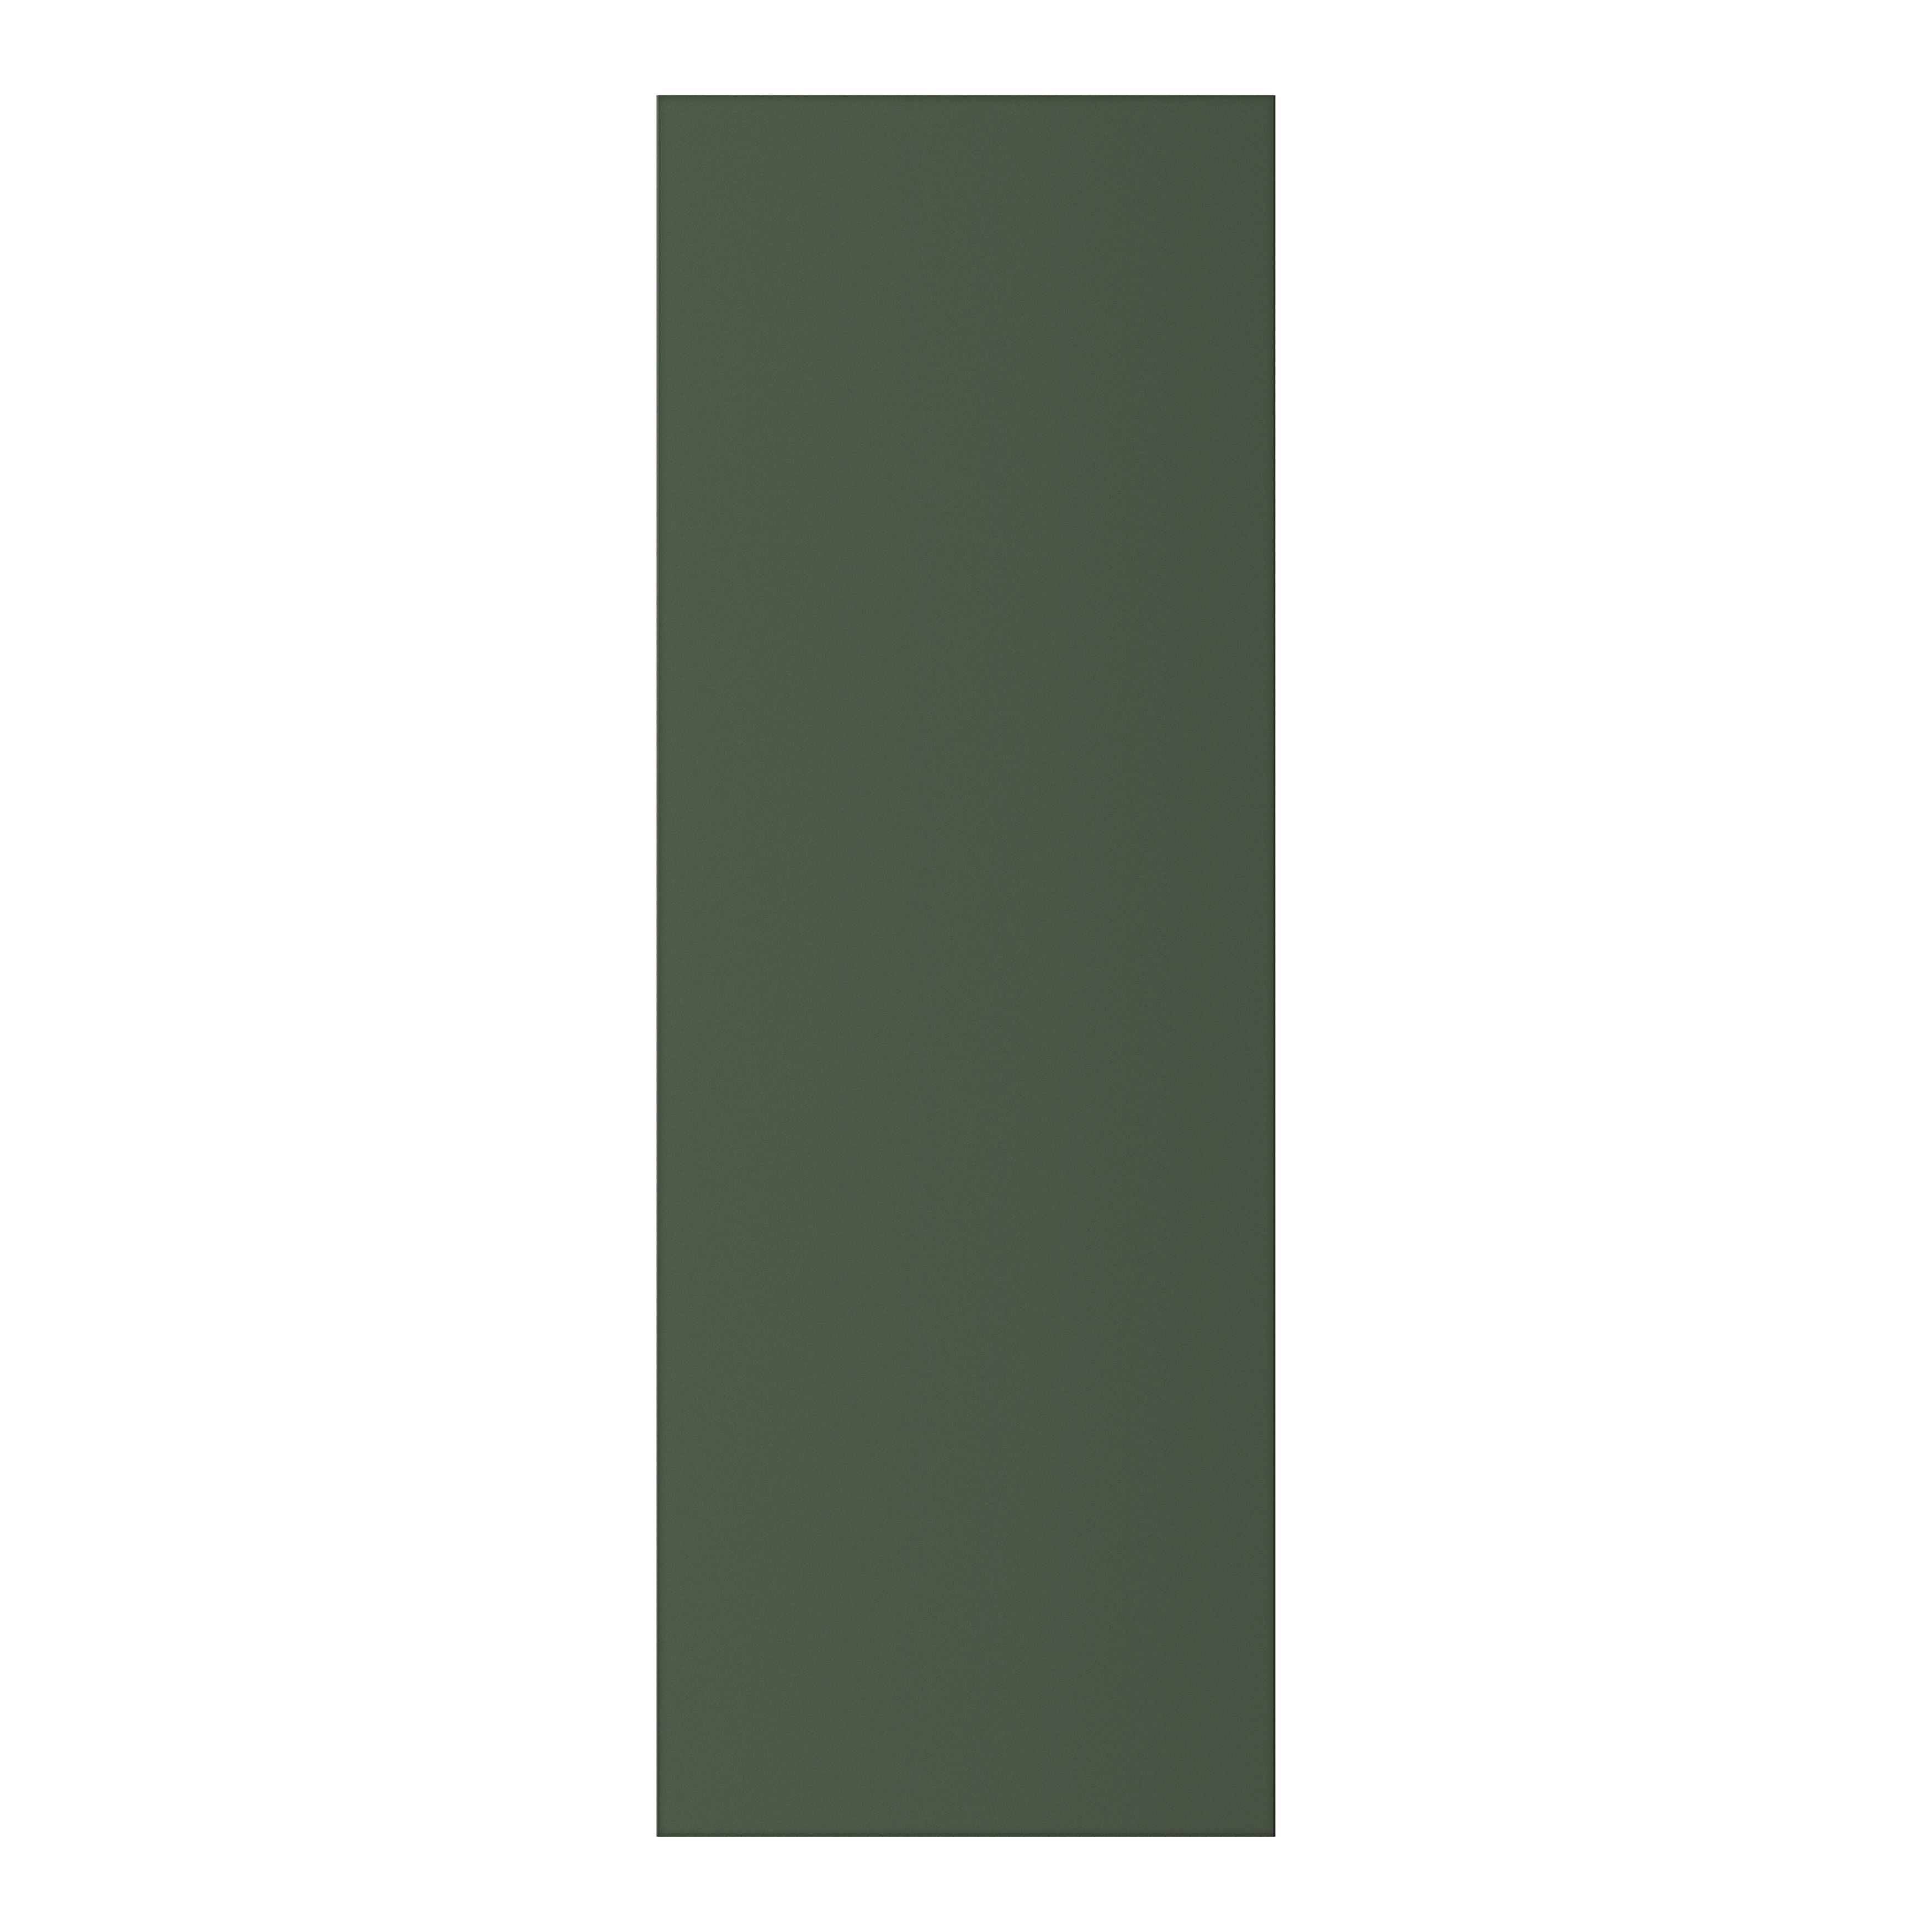 GoodHome Artemisia Matt dark green shaker Blanking panel (H)900mm (W)320mm